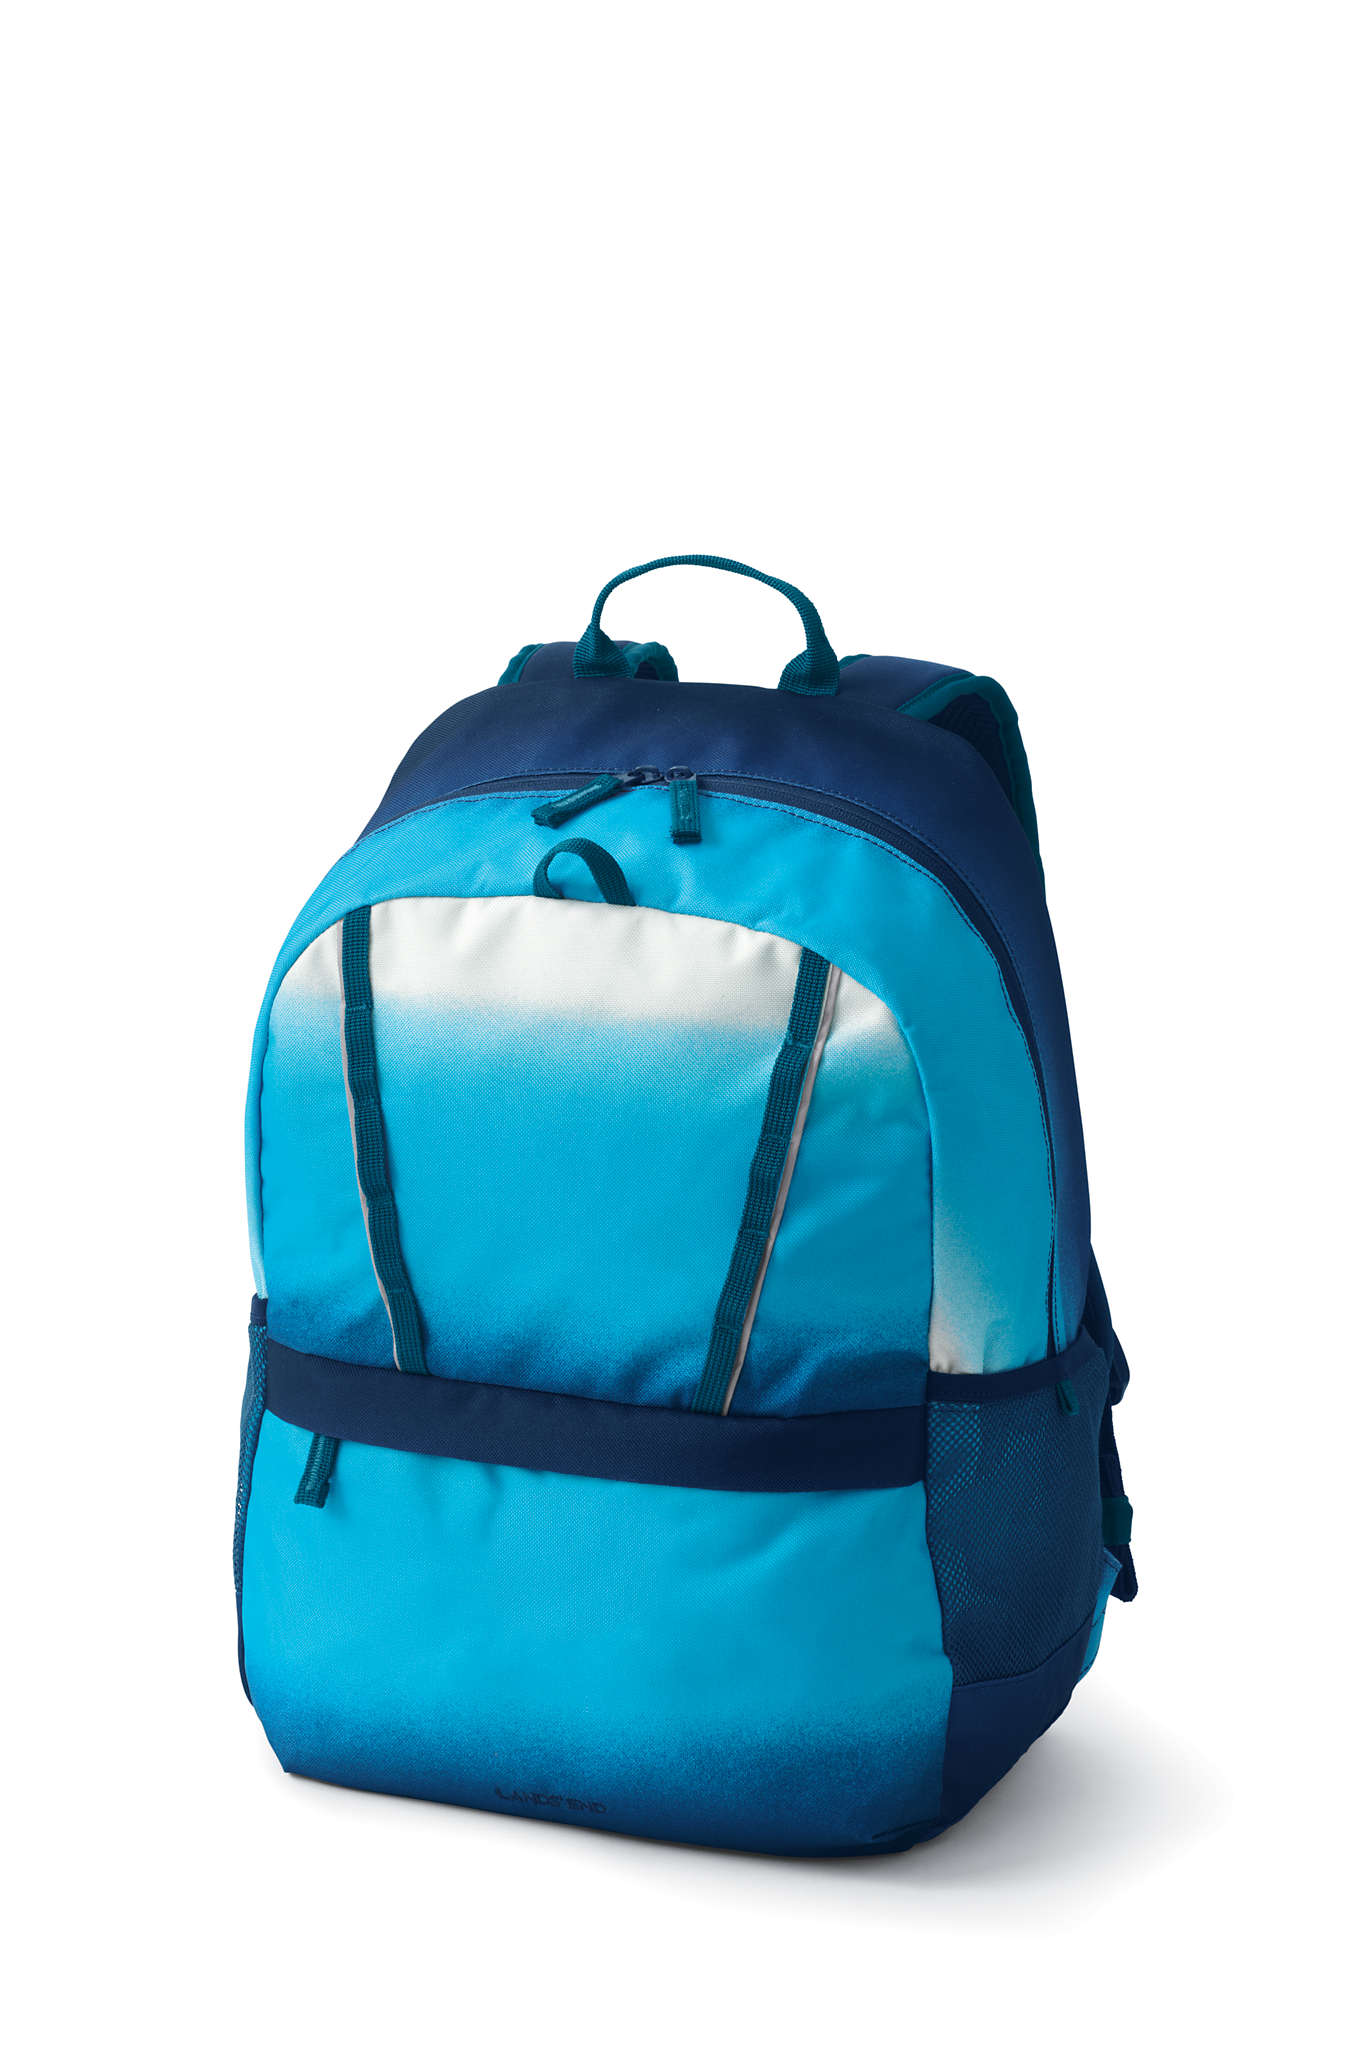 ClassMate Medium Backpack